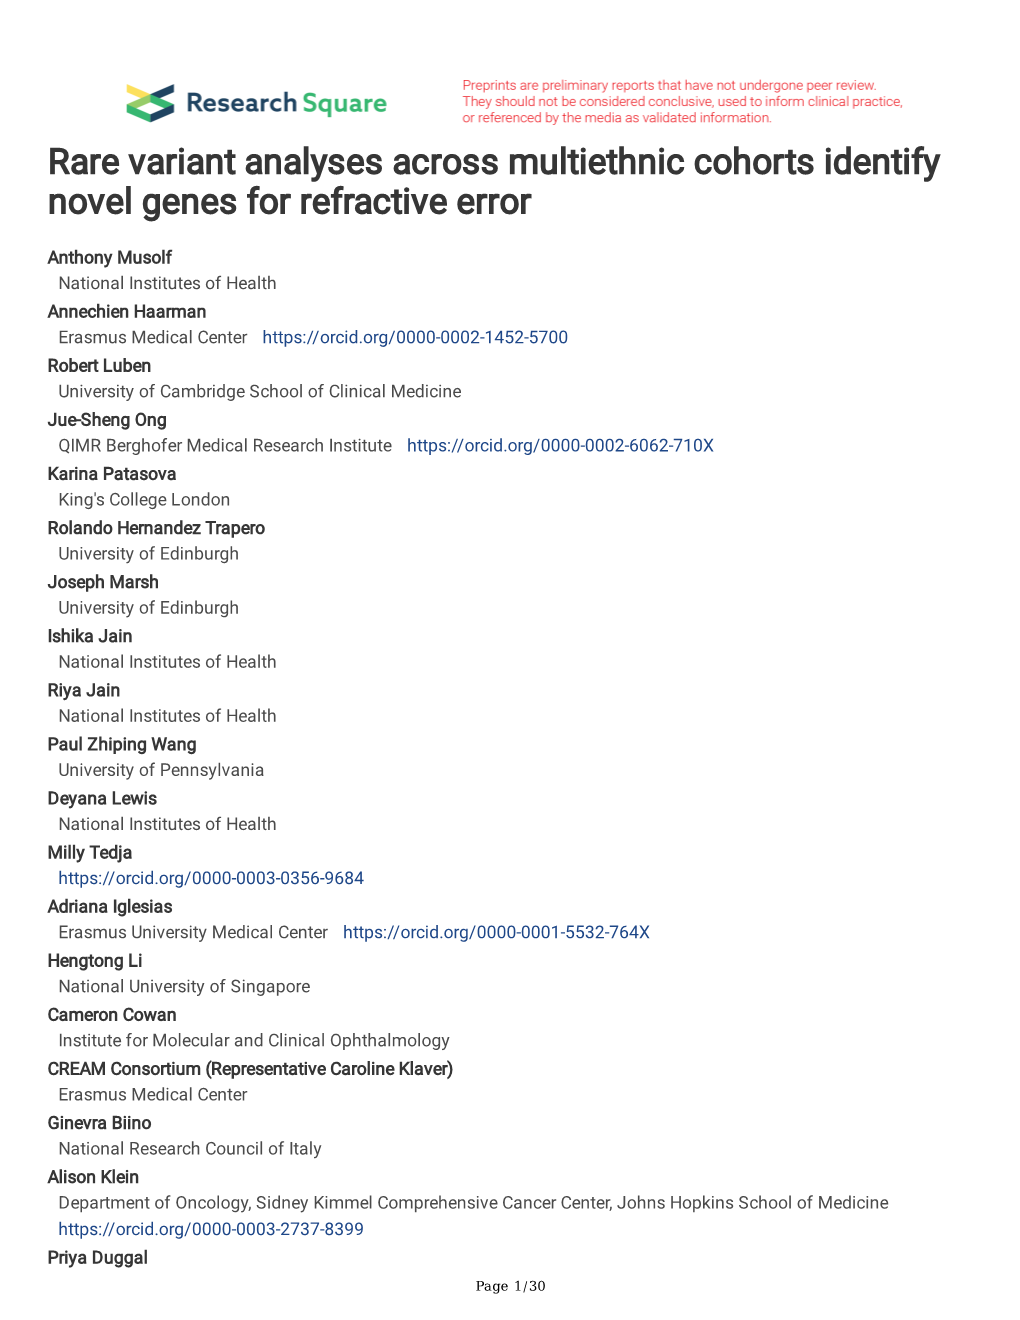 Rare Variant Analyses Across Multiethnic Cohorts Identify Novel Genes for Refractive Error